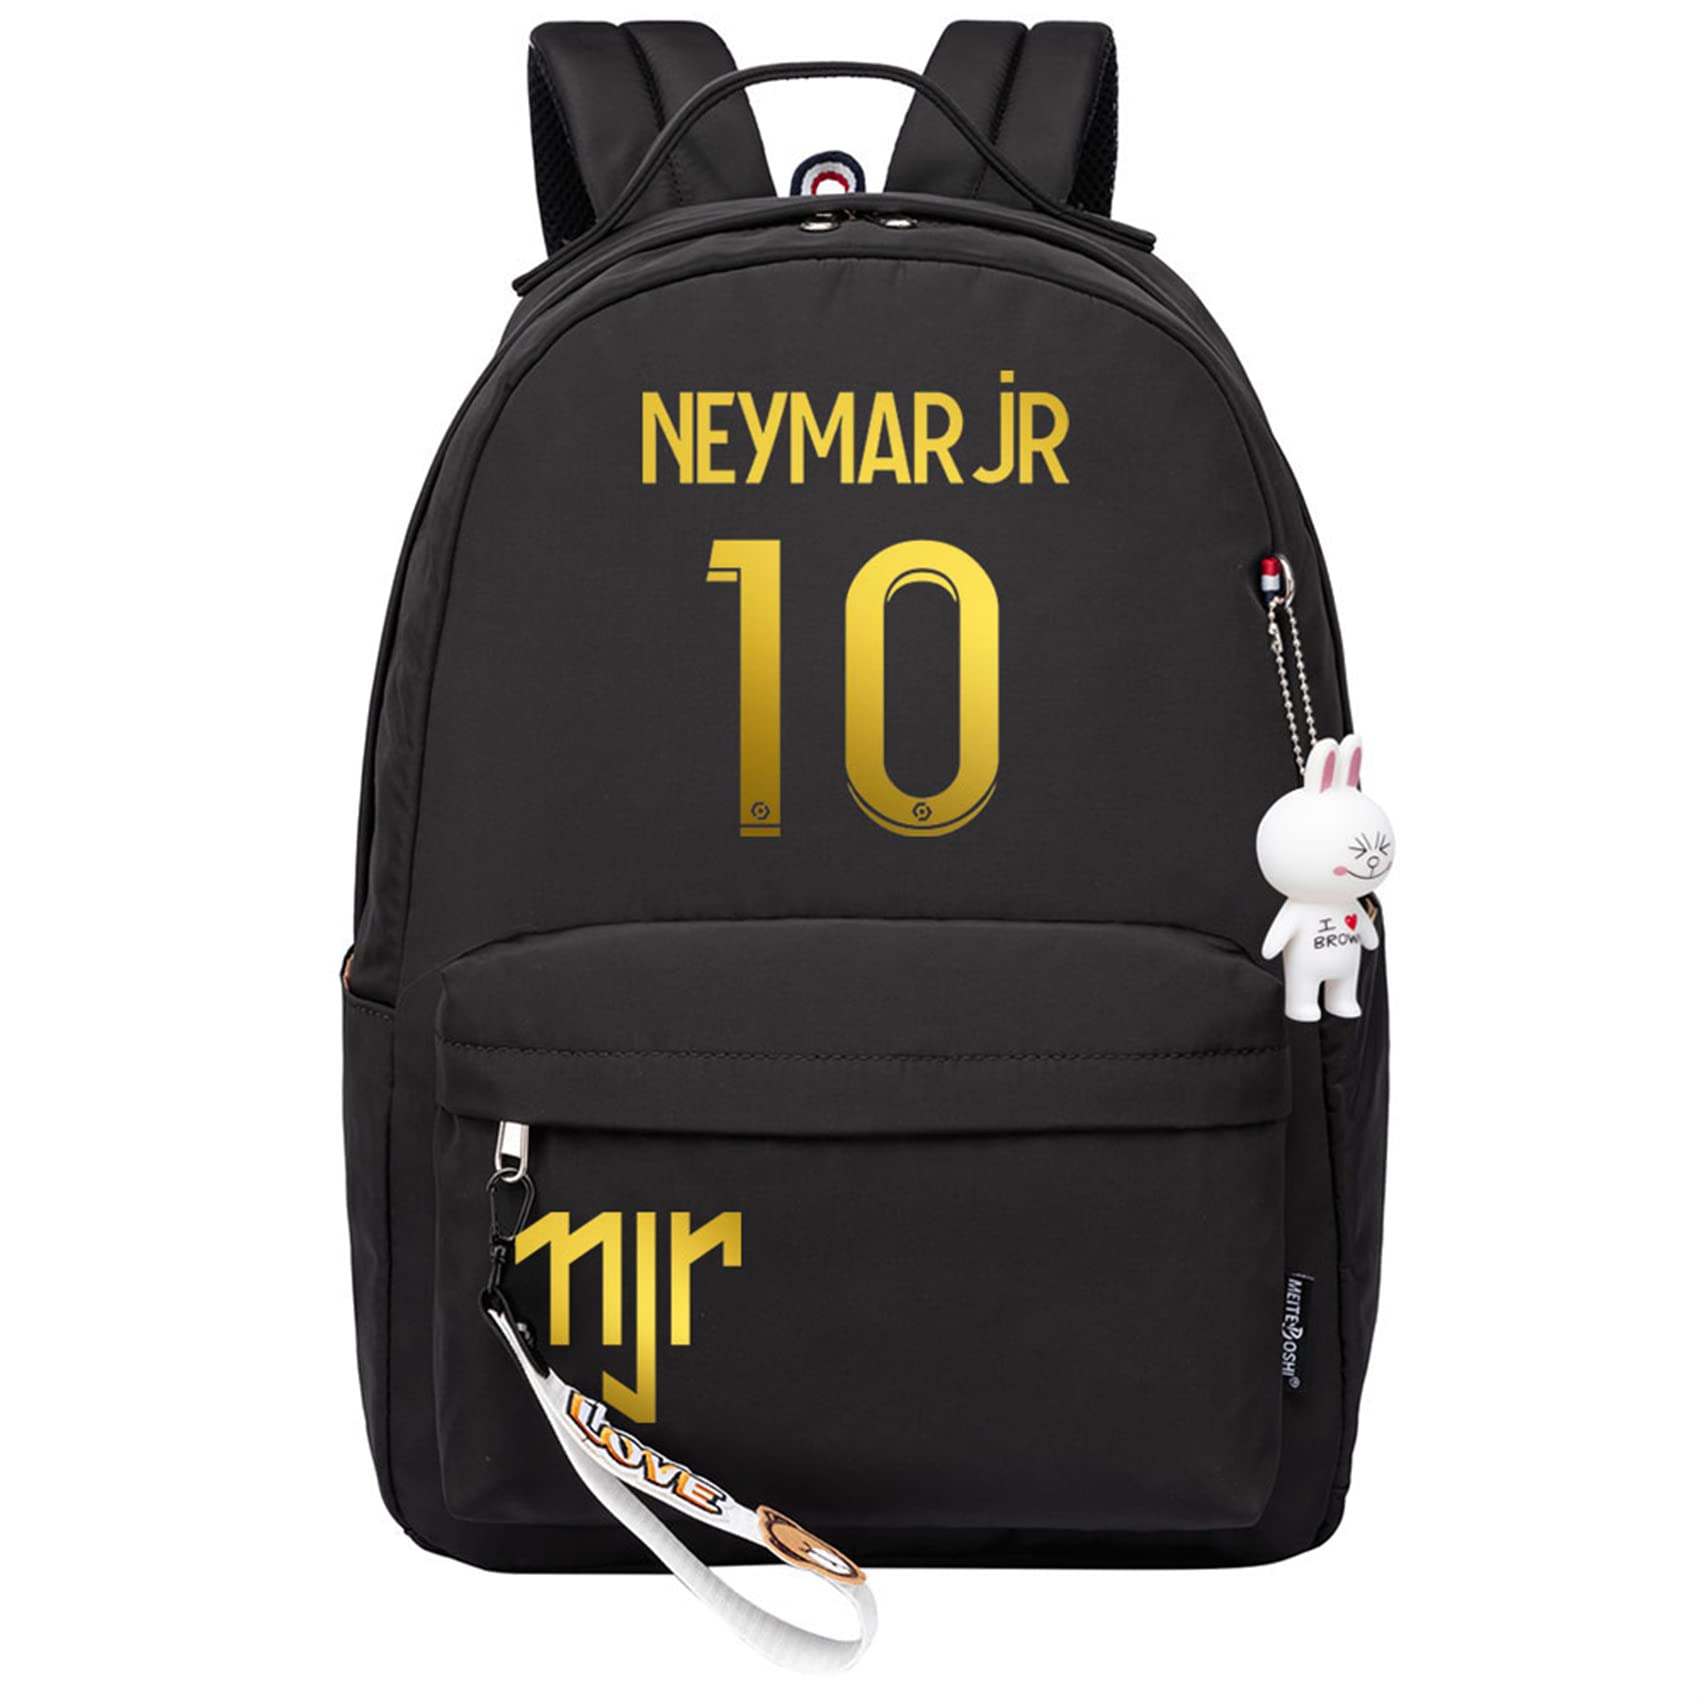 Potekoo Teens Canvas Soccer Stars Bag Neymar JR Graphic Student Bookbag Casual Basic Daypacks for Travel,Hiking